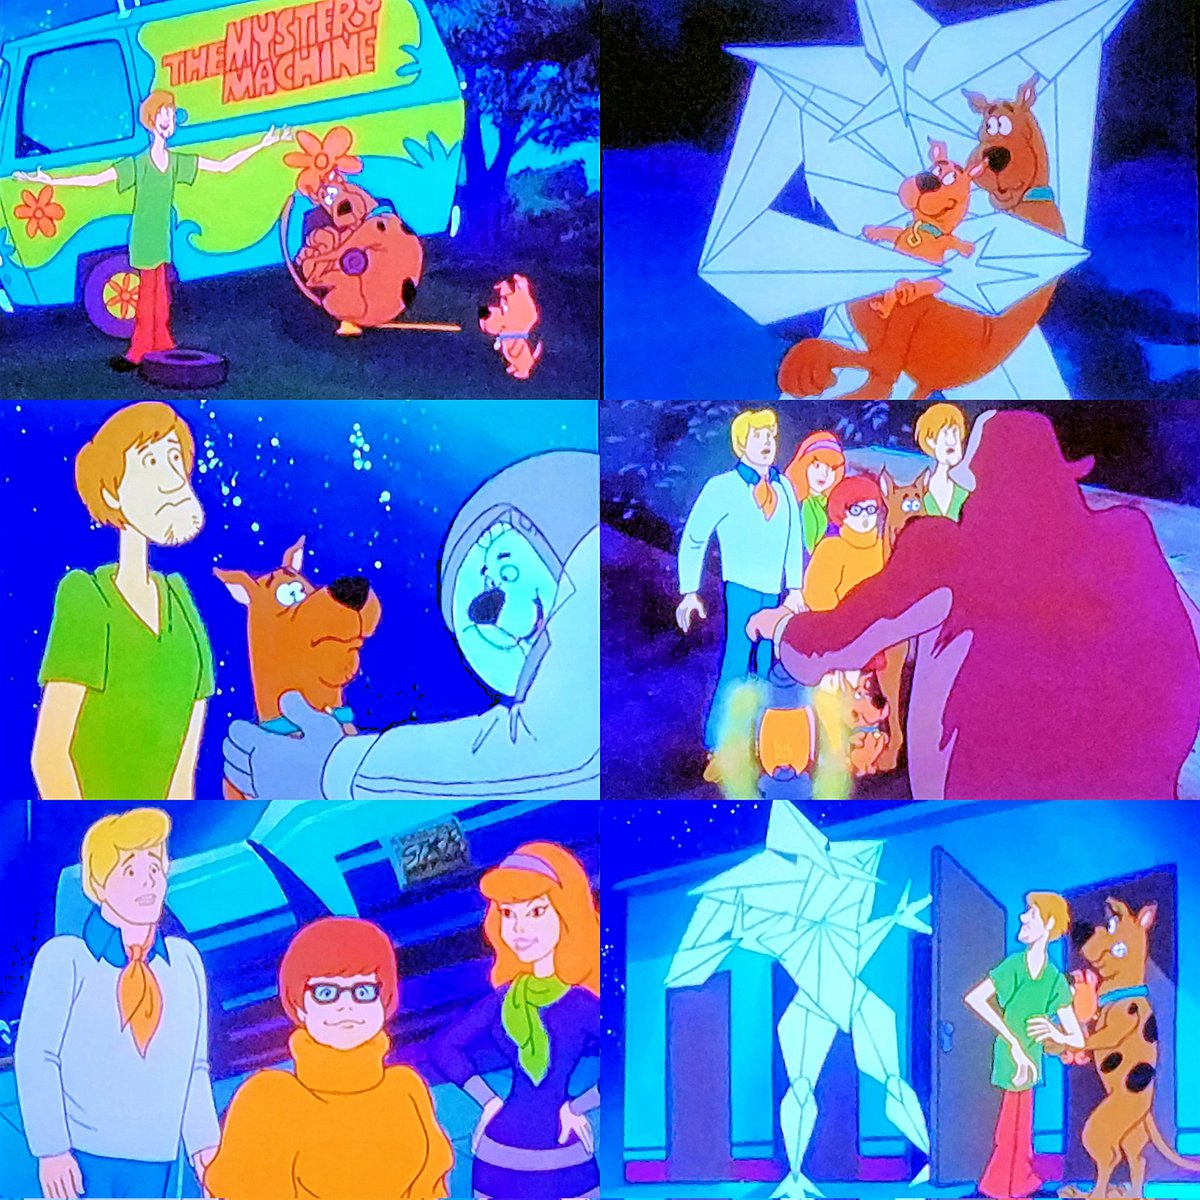 #NowWatching
Scooby-Doo & Scrappy-Doo🔎🐾
S01E11 Dec 1st, 1979🗓📺

'When You Wish Upon a Star Creature'🌟🔭

#ScoobyDoo #ScrappyDoo #ShaggyRogers #VelmaDinkley #DaphneBlake #FredJones #HannaBarbera #SaturdayMorningCartoons #Animation #TVSeries #Retro #Nostalgia